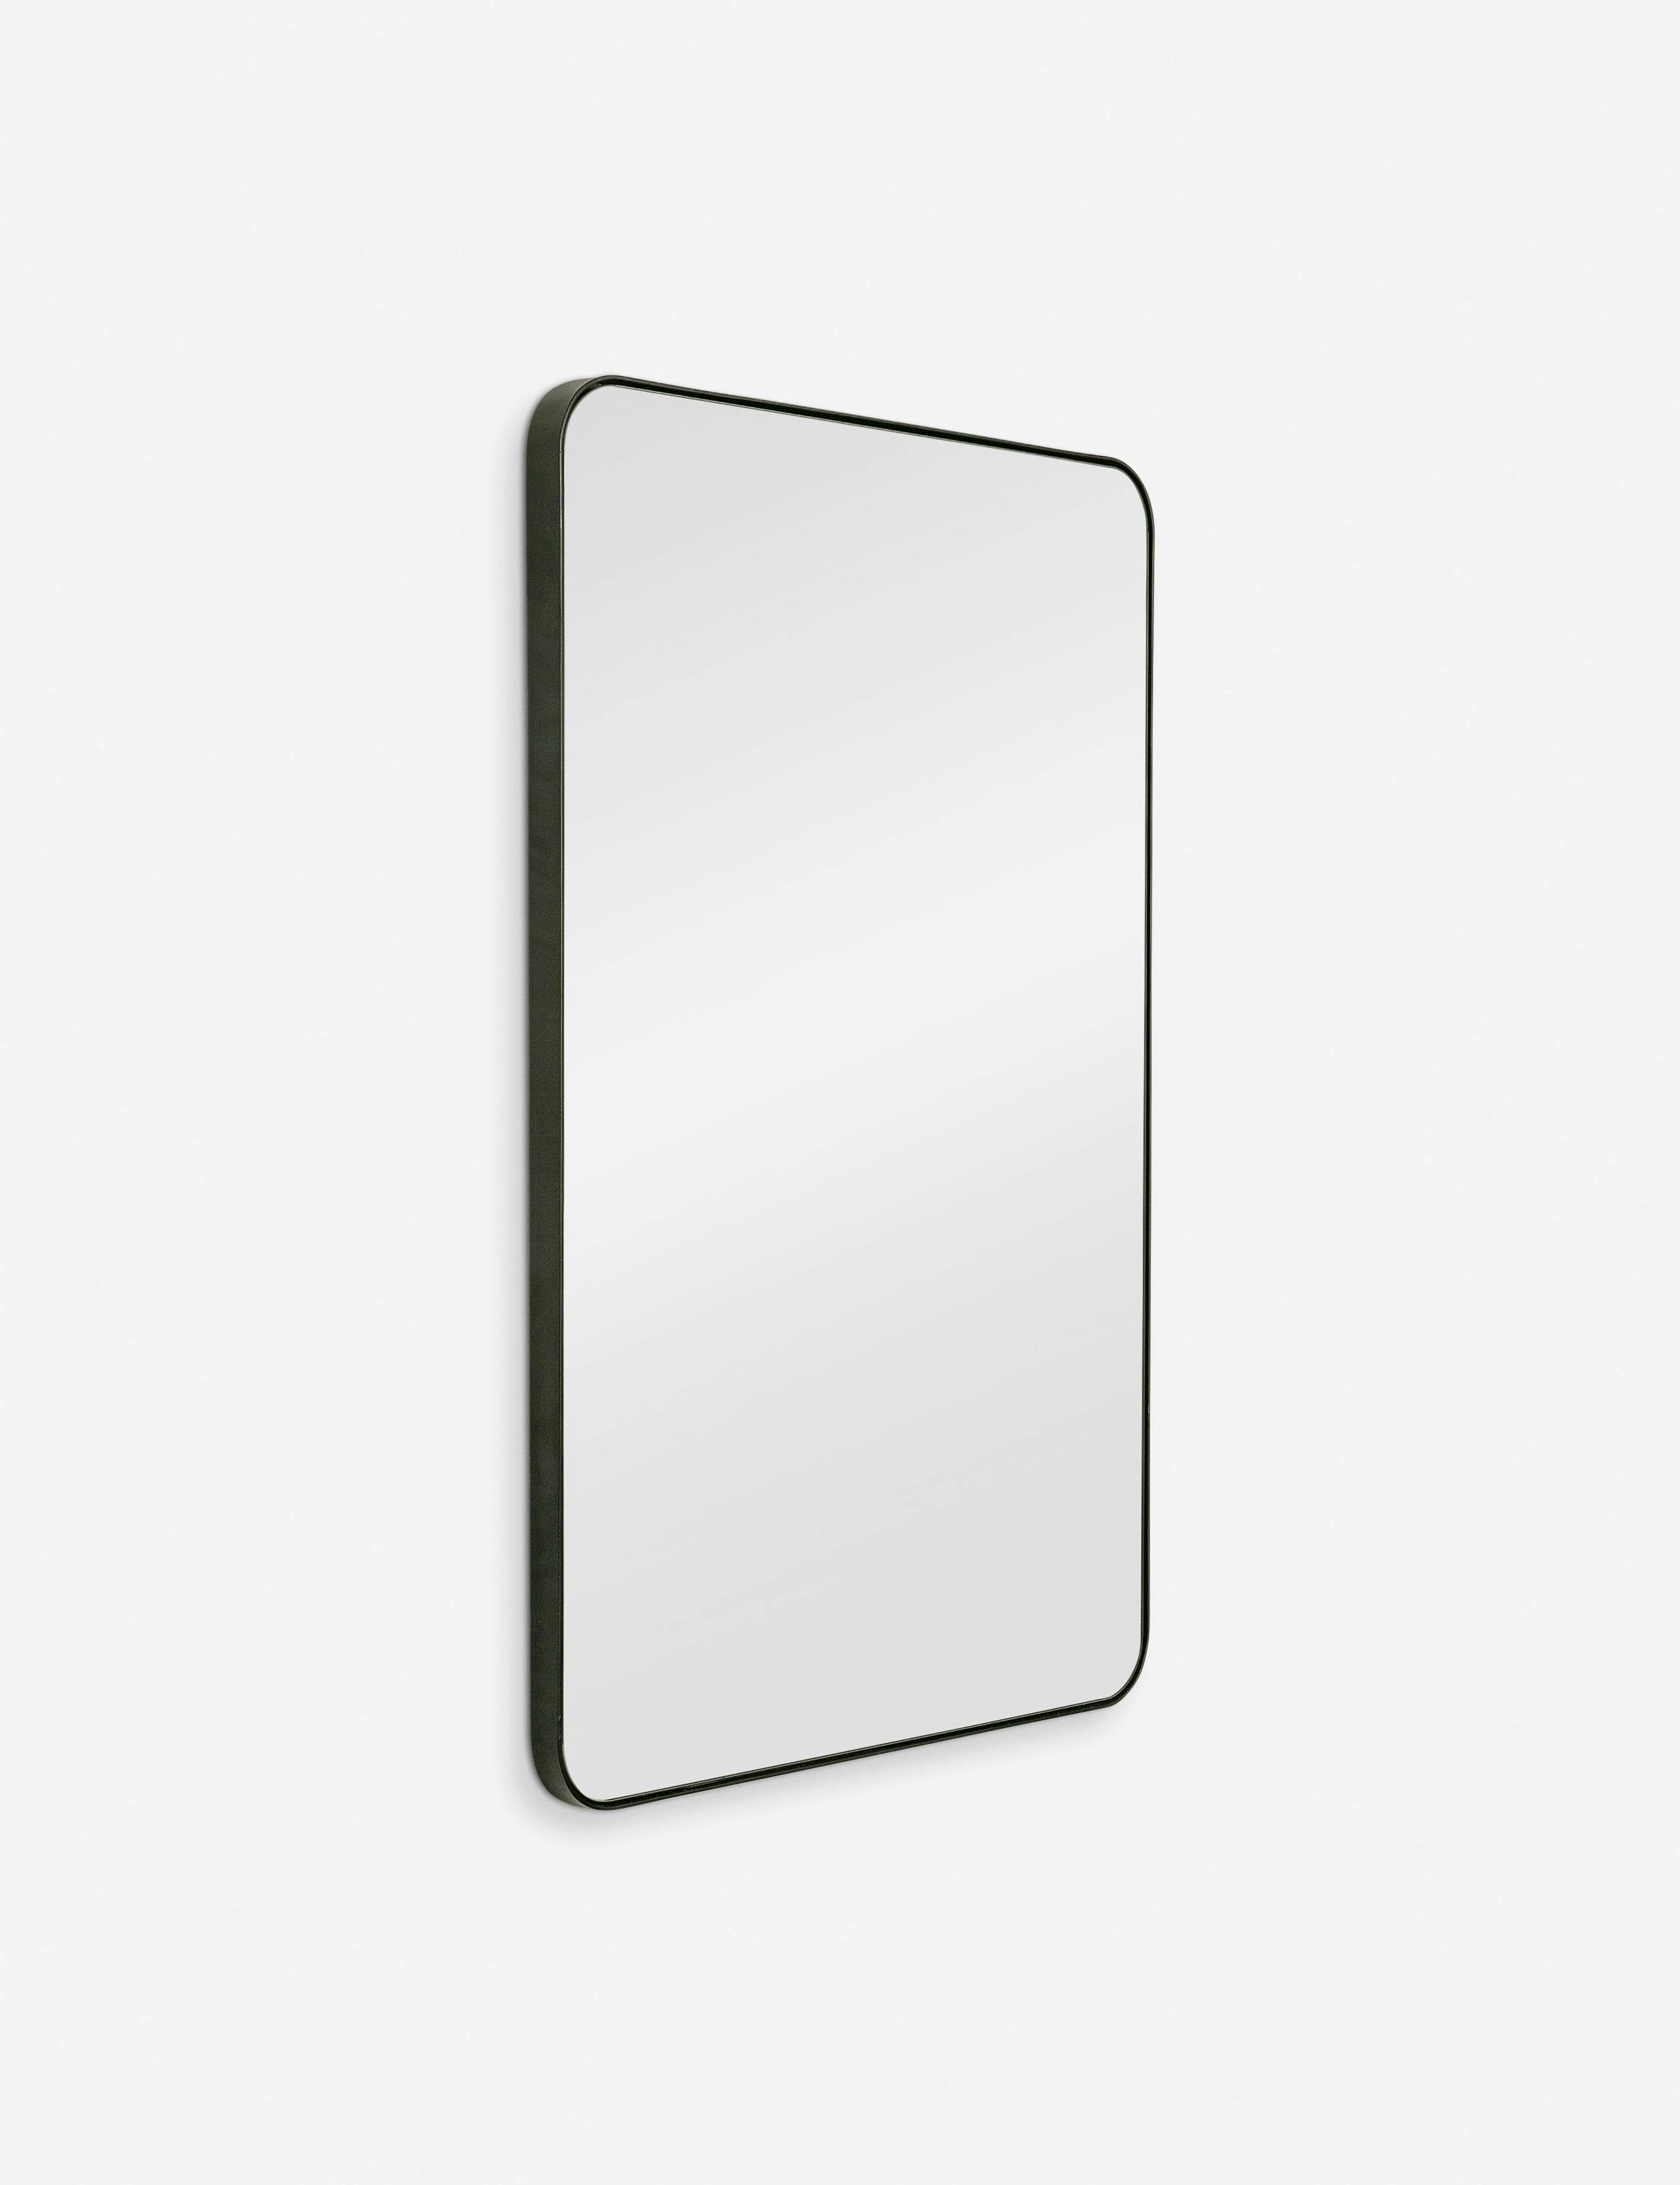 Aster Full-Length Rectangular Wood Mirror in Matte Black